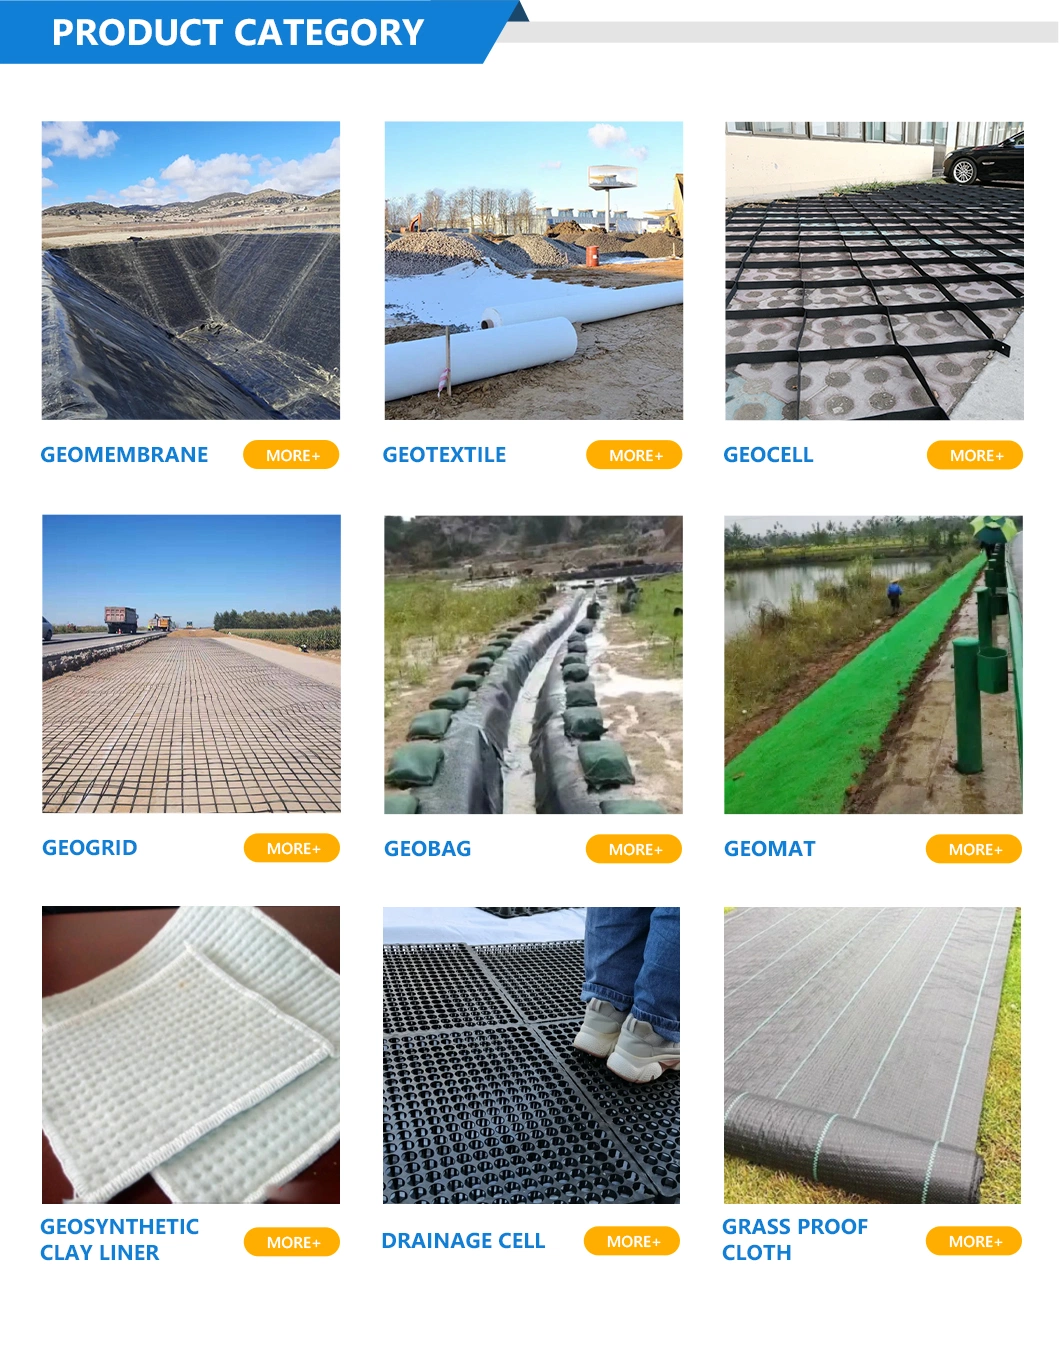 Customized HDPE/LDPE/PE/EV/Ecb/PVC Textured/Composite Geomembrane Manufacturer for Aquaculture/Fish Farm/Shrimp/Pond/Dam/Landfill/Mining/Salt/Tailing Liner